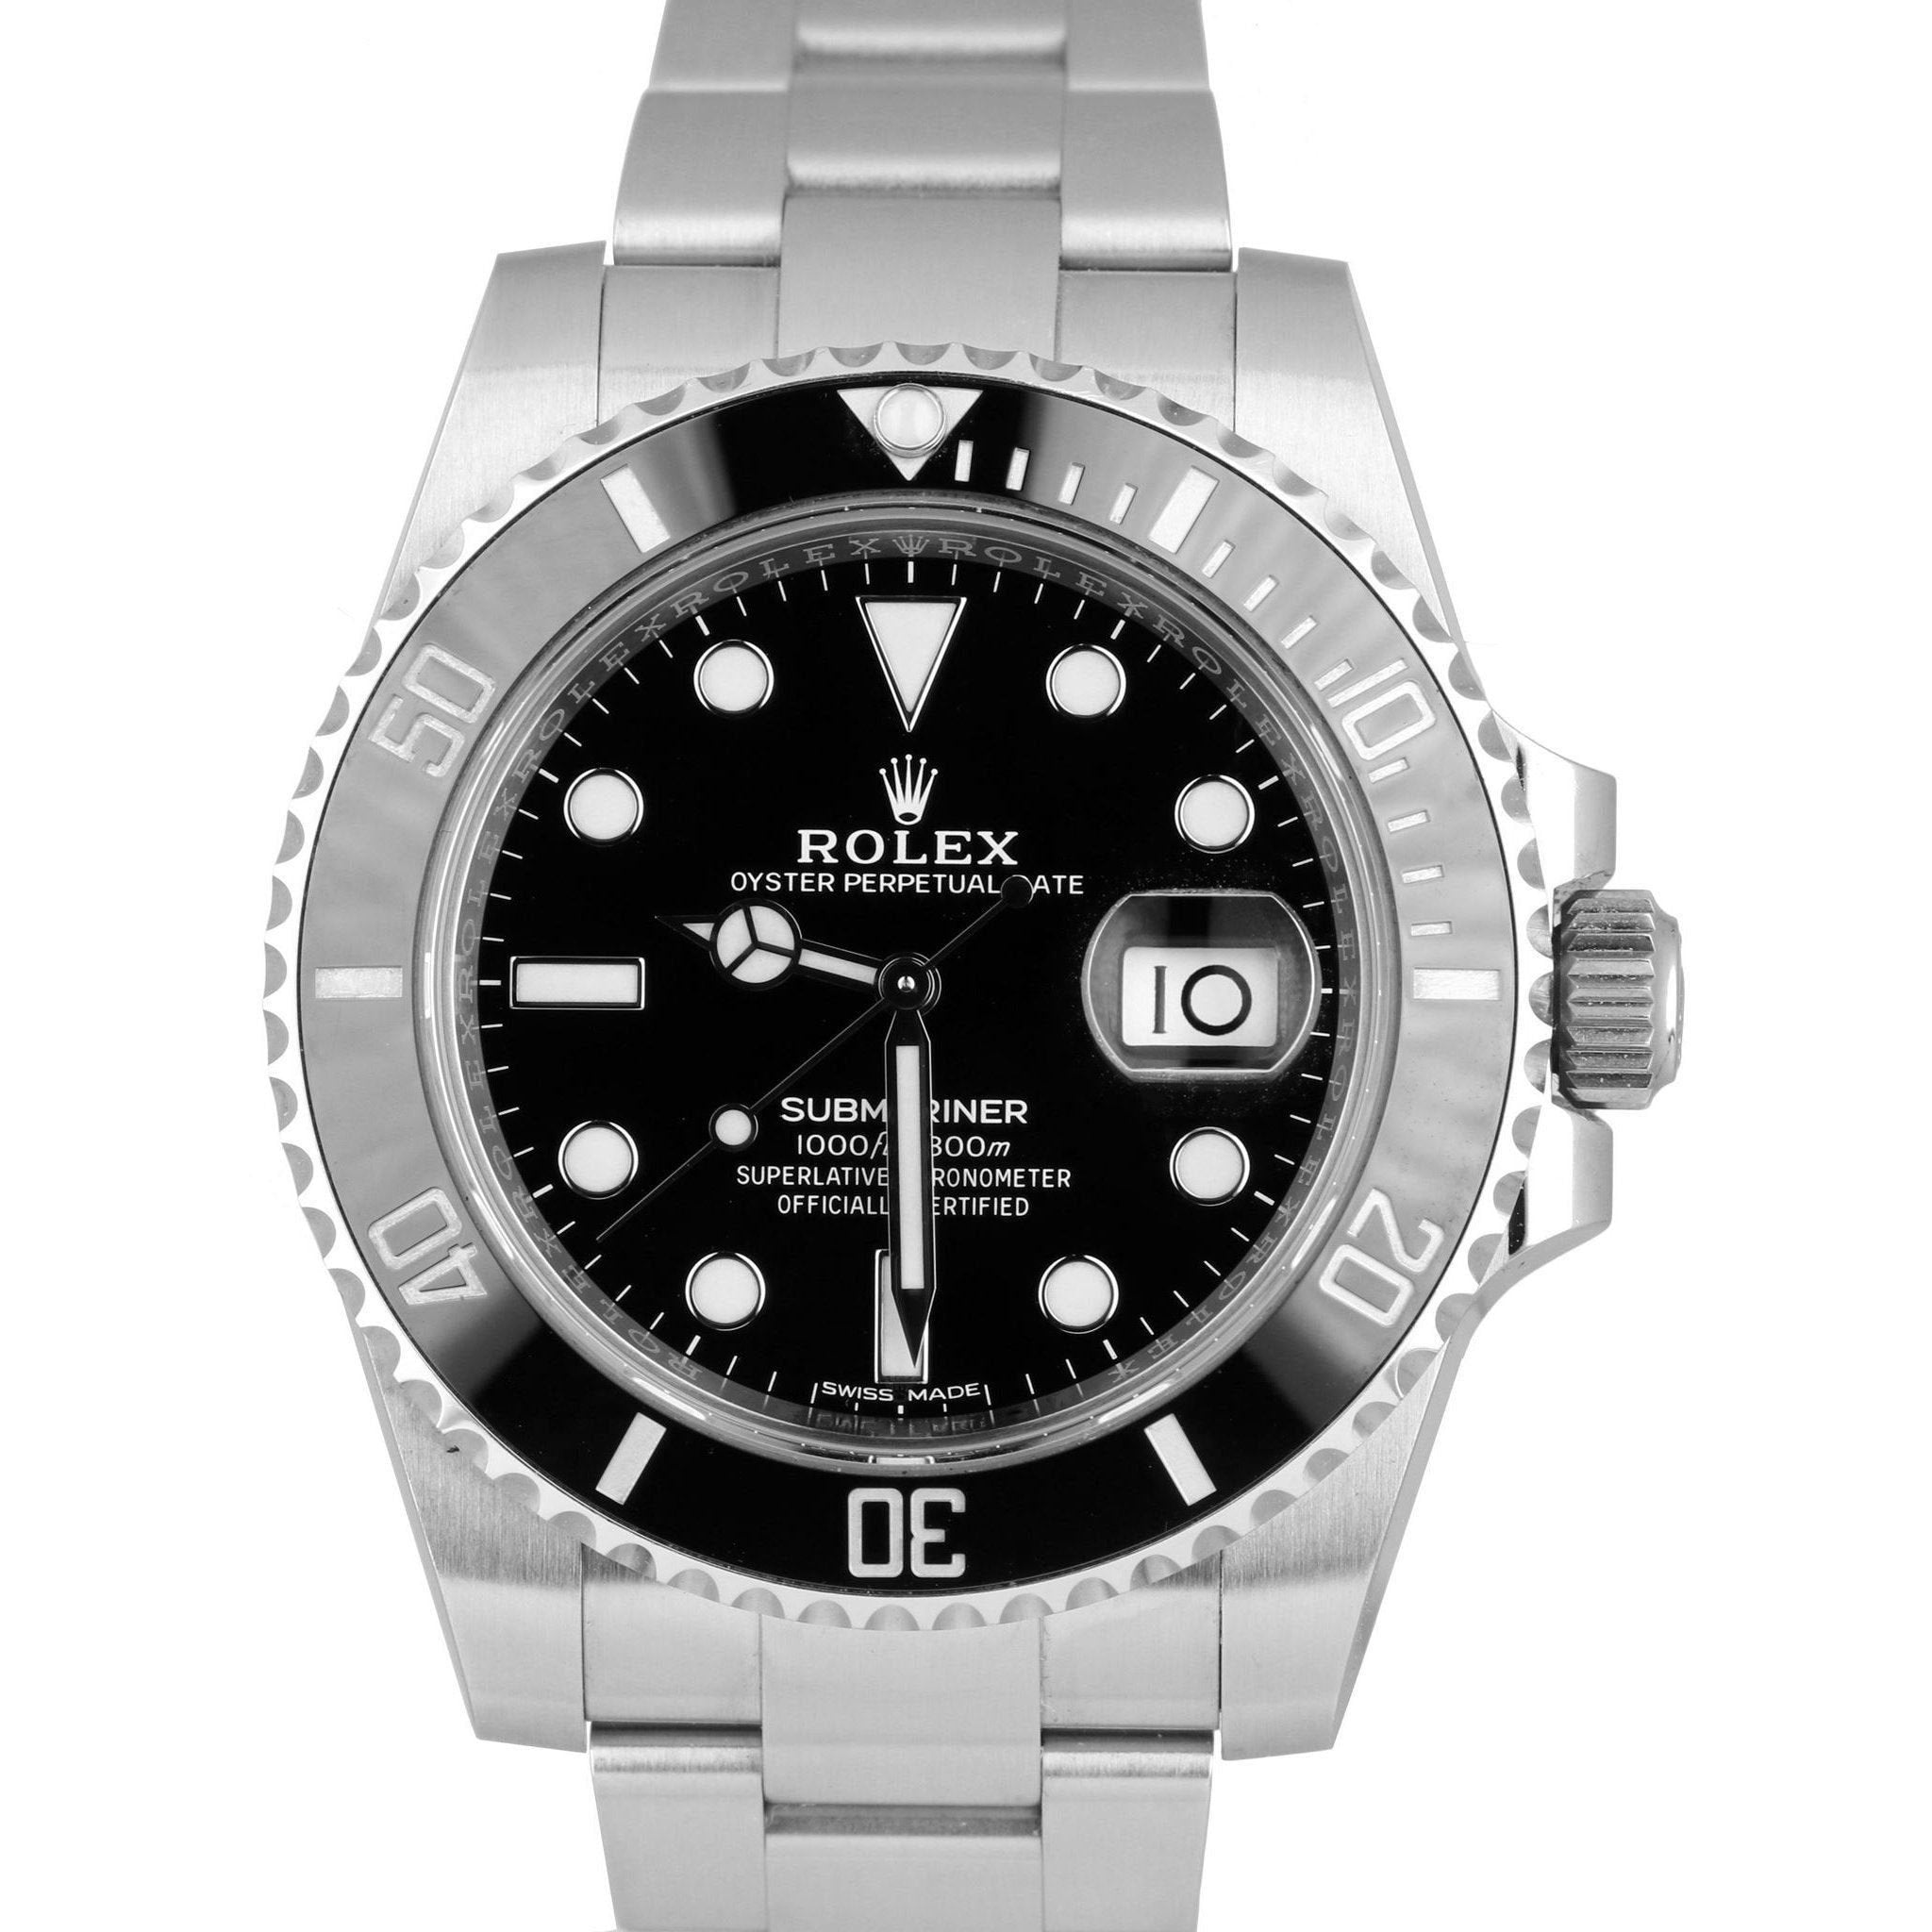 MINT 2015 Rolex Submariner Date 40mm Stainless Black Ceramic 116610 LN Watch B+P